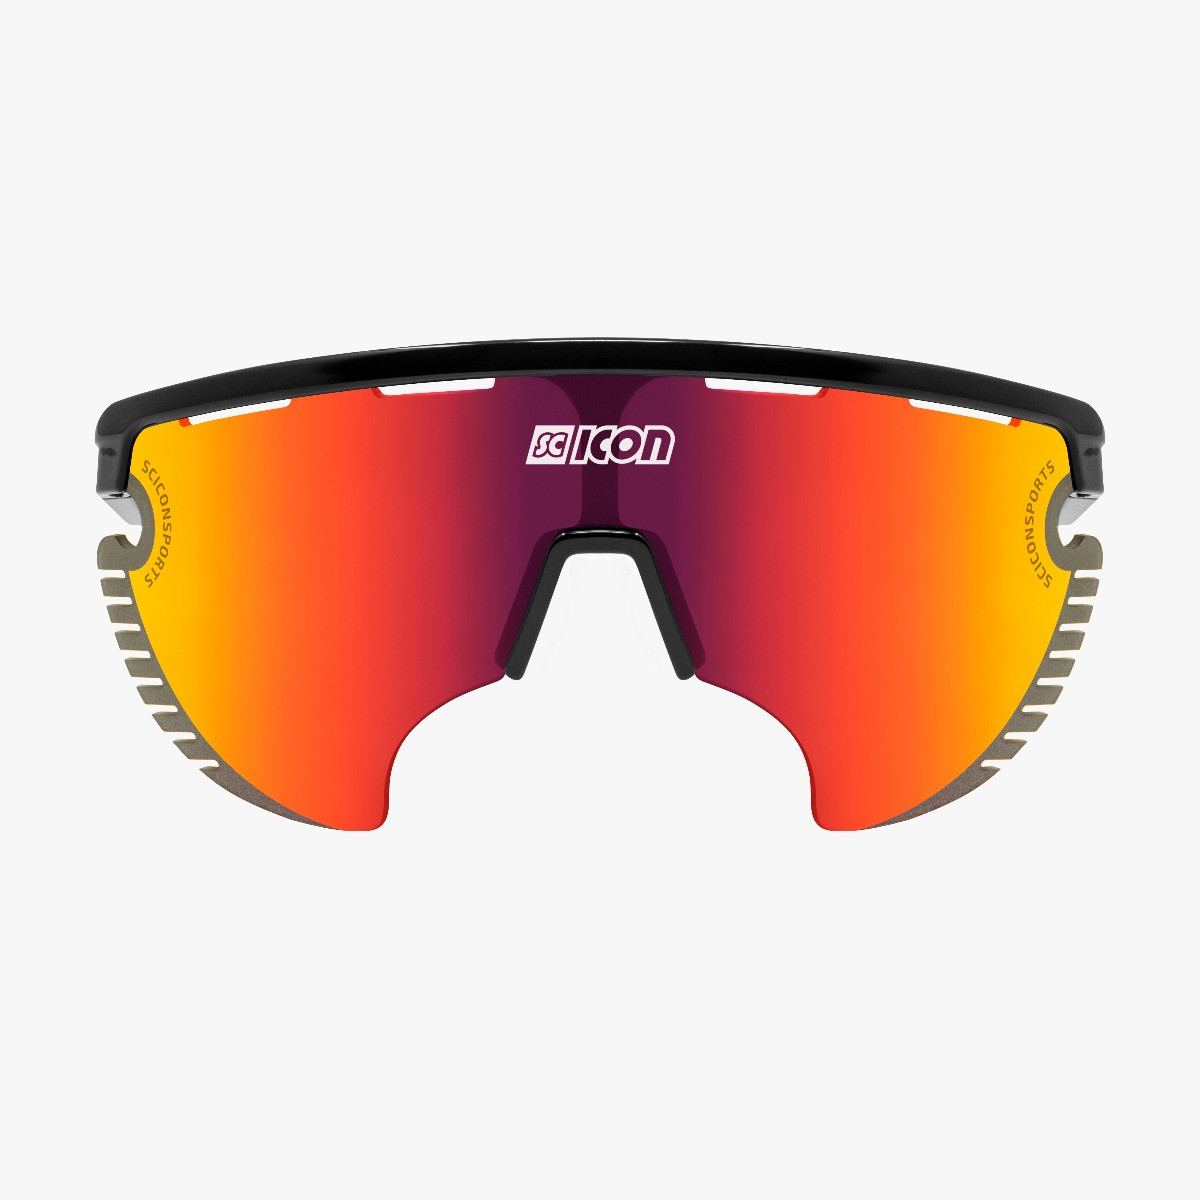 Scicon Sports | Aerowing Lamon Sport Performance Sunglasses - Black Gloss / Multimirror Red - EY30060200
